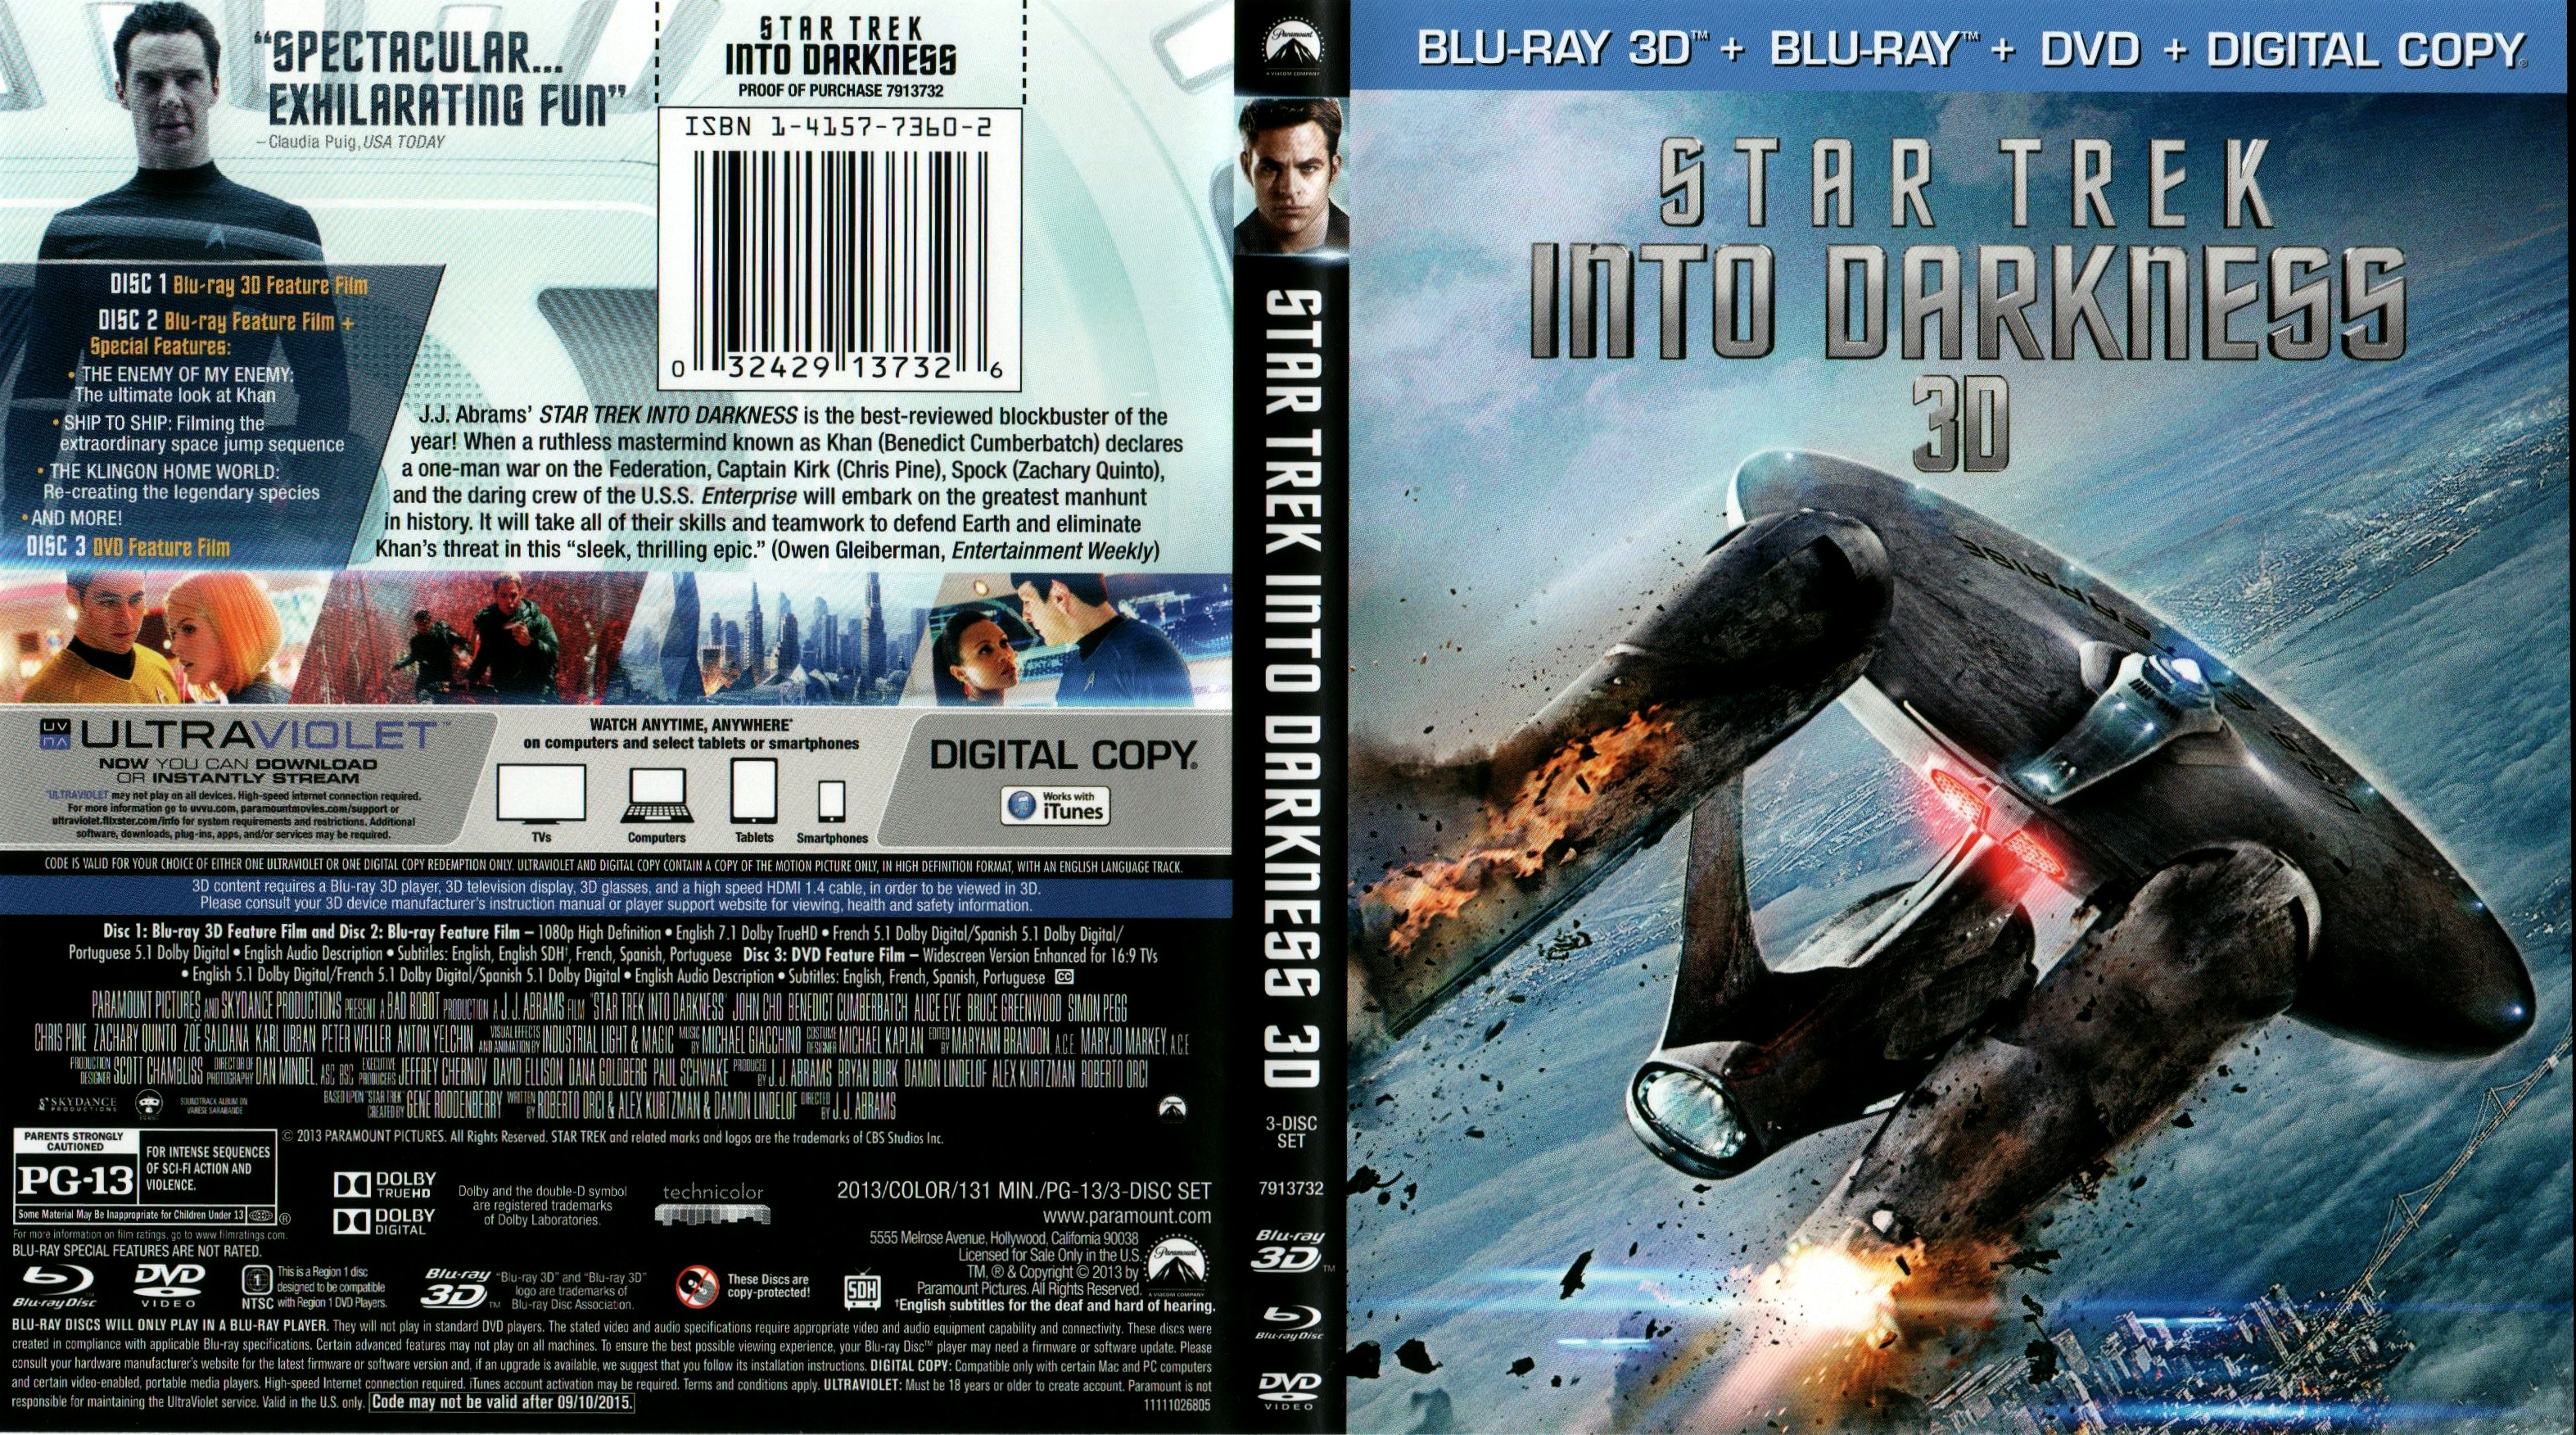 Covers Box Sk Star Trek Into Darkness Blu Ray D High